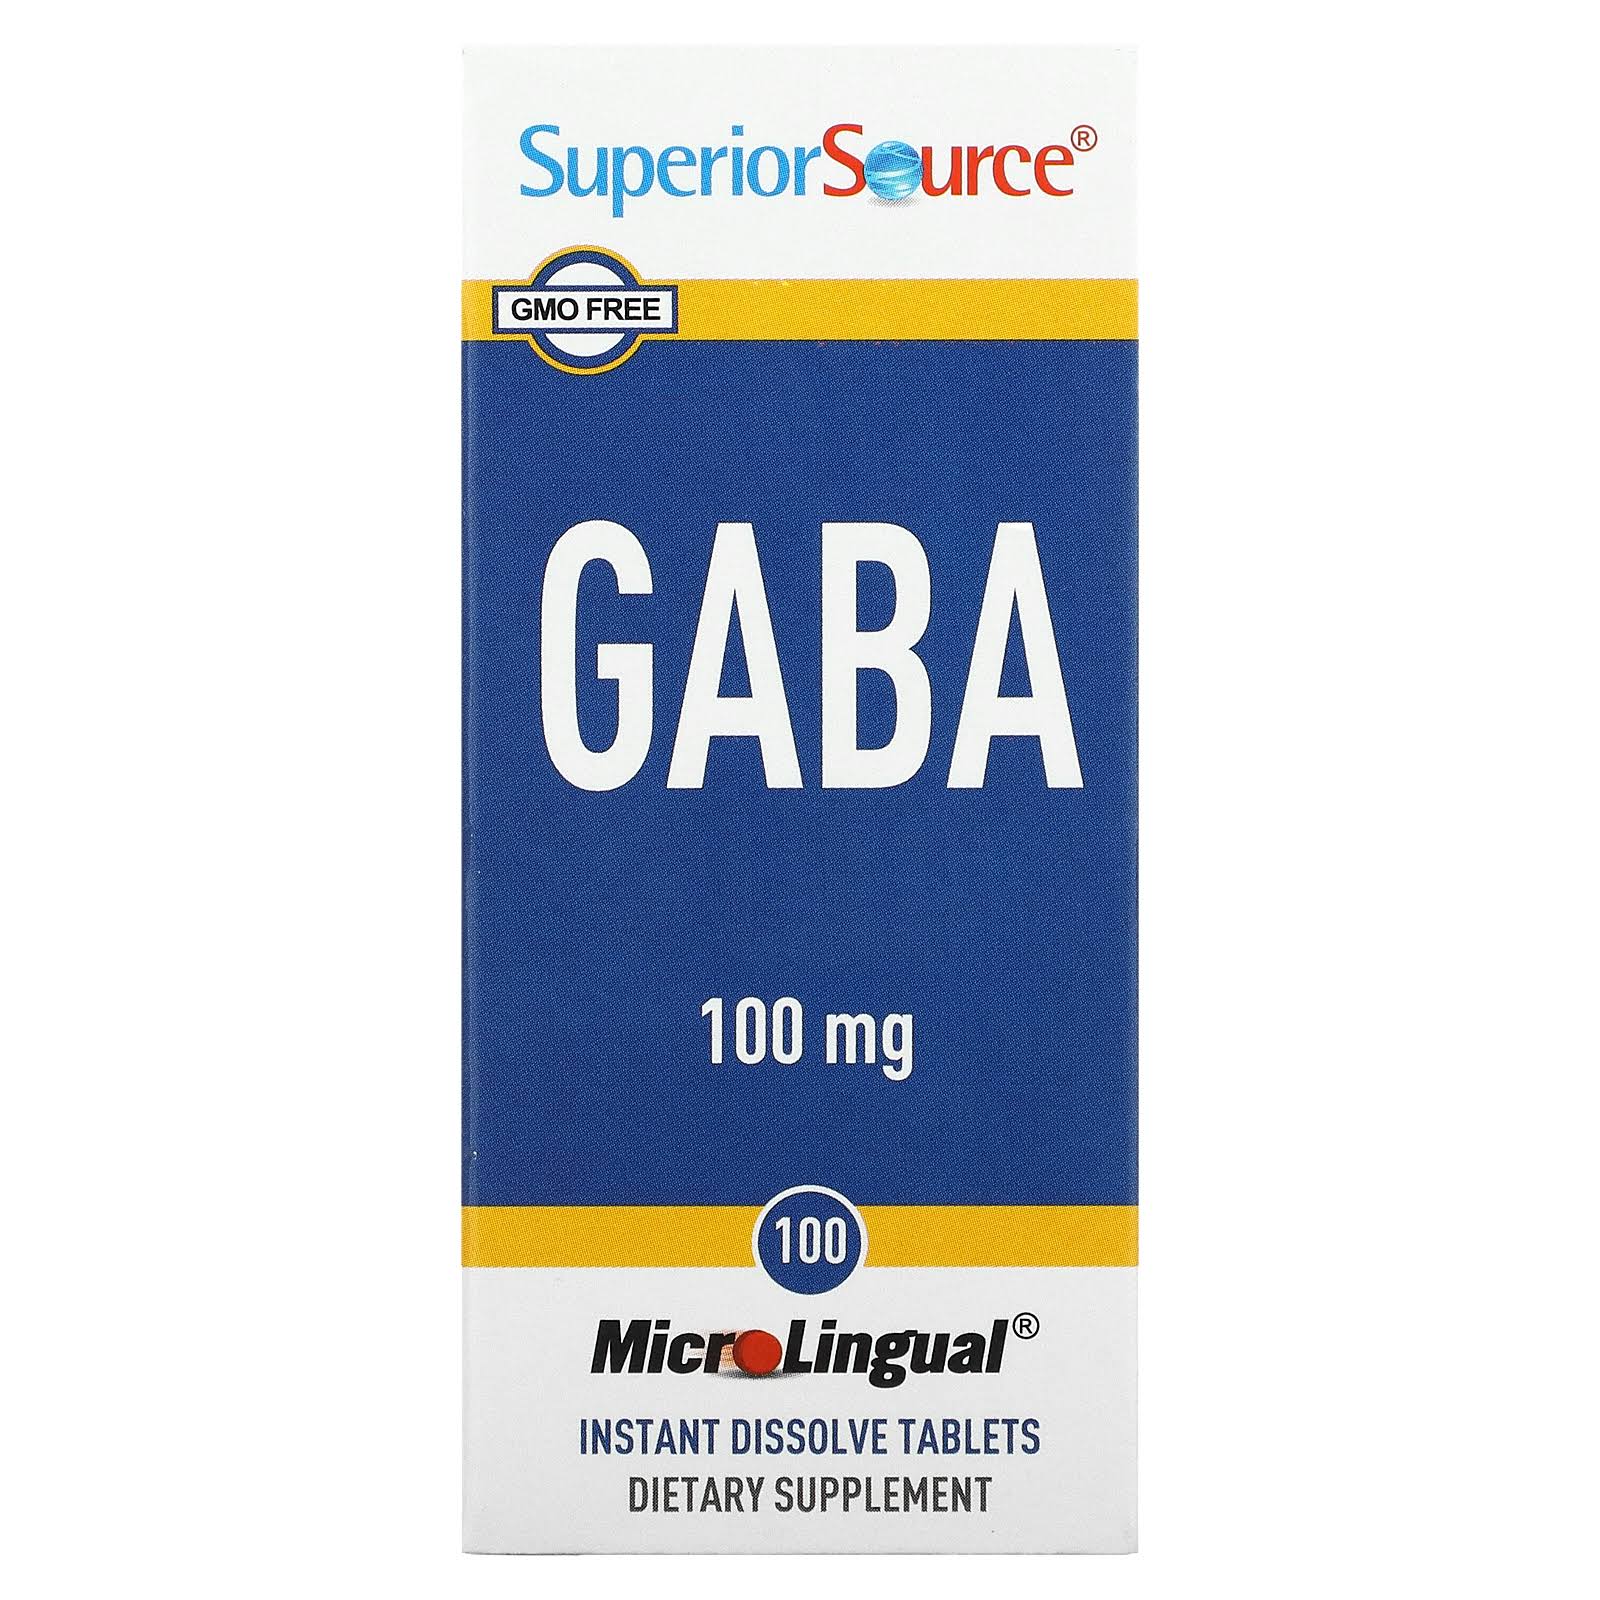 Superior Source Gaba Multivitamins Supplement - 100mg, 100ct